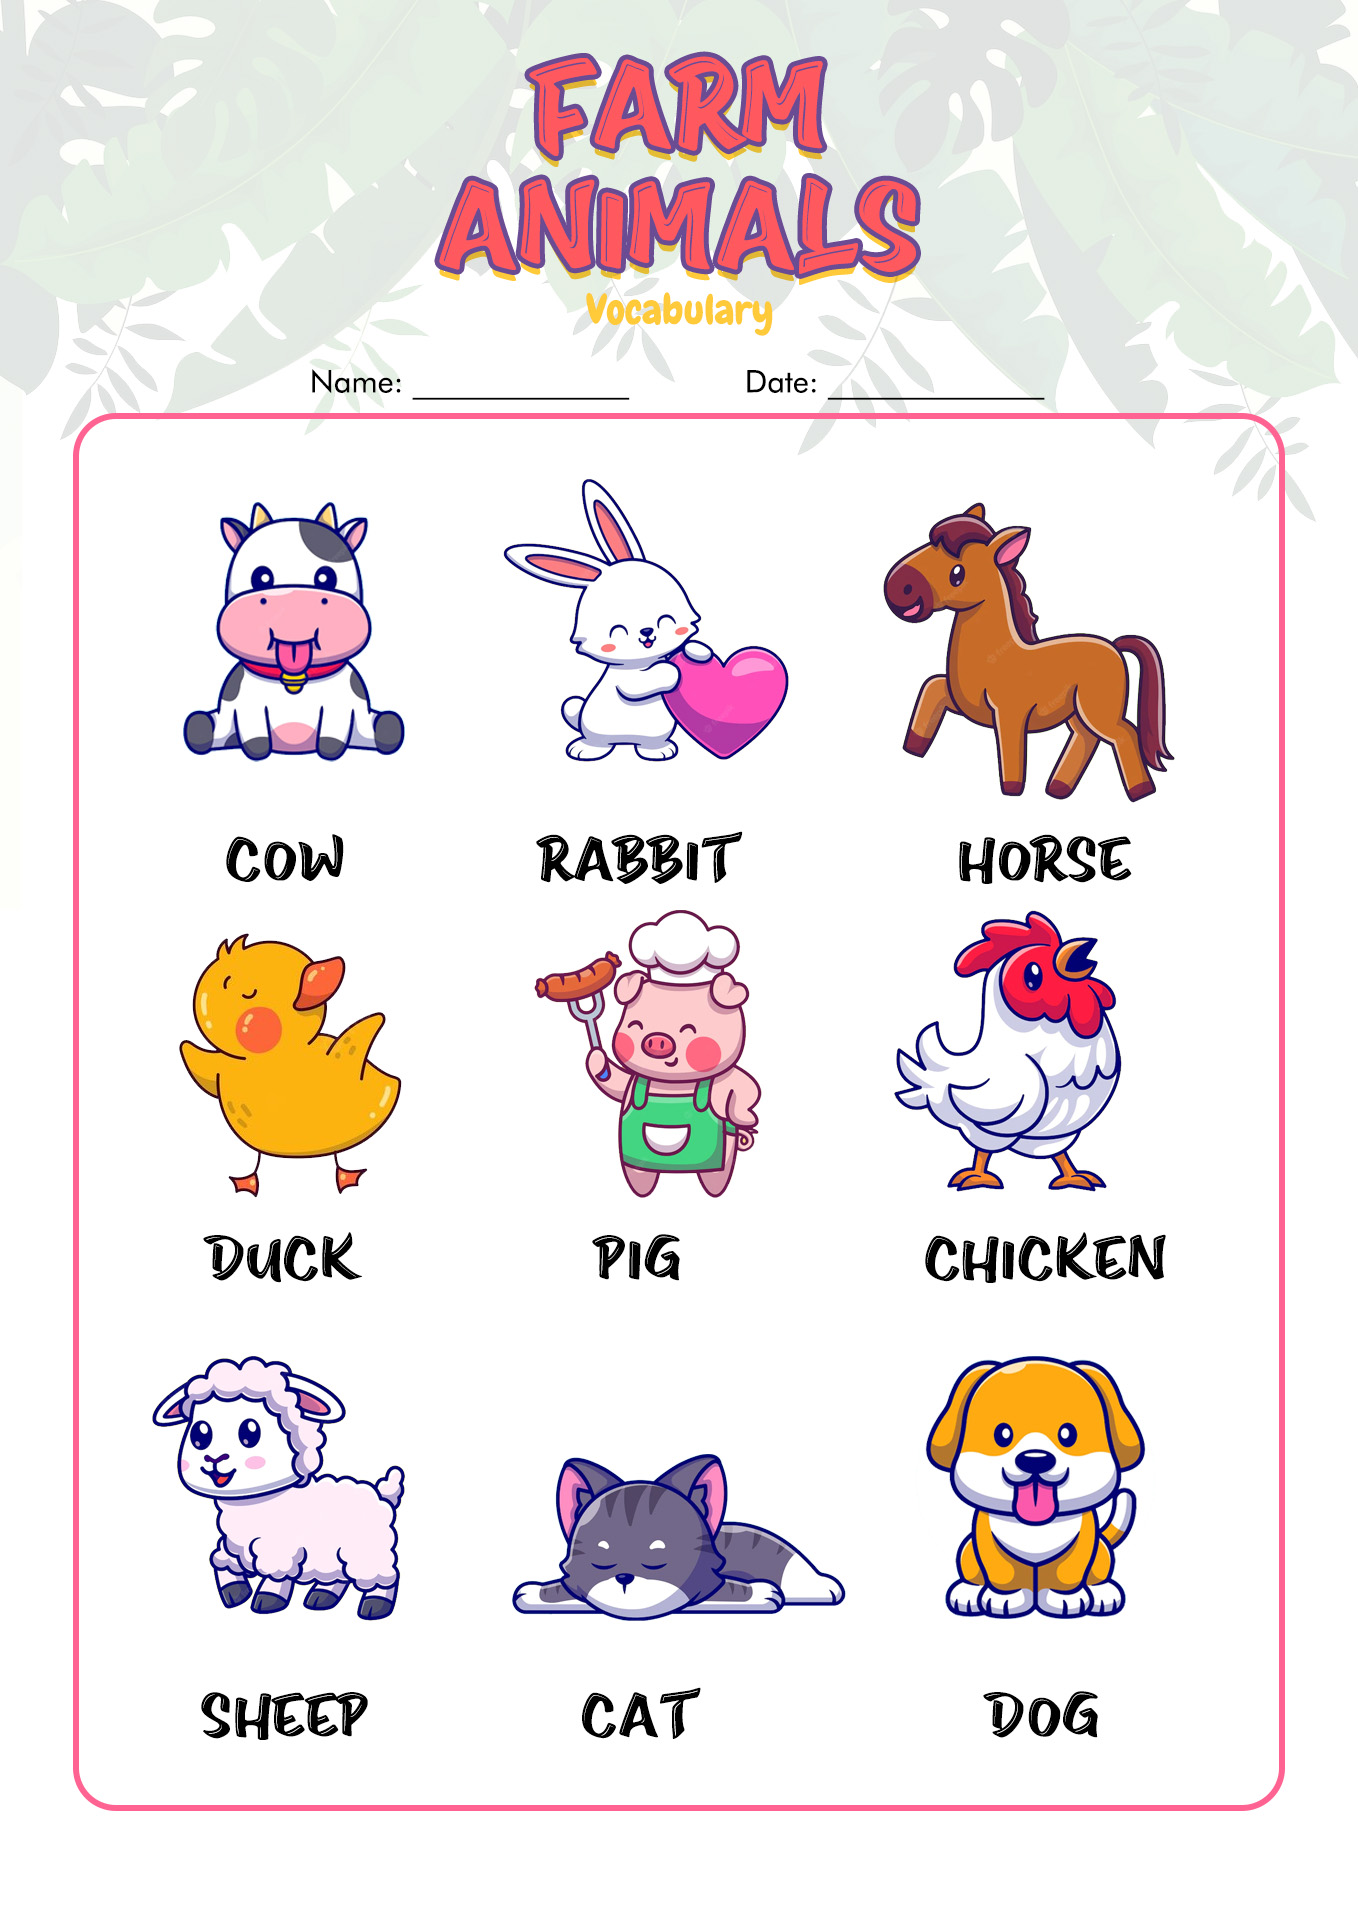 Animal Farm Vocabulary Image